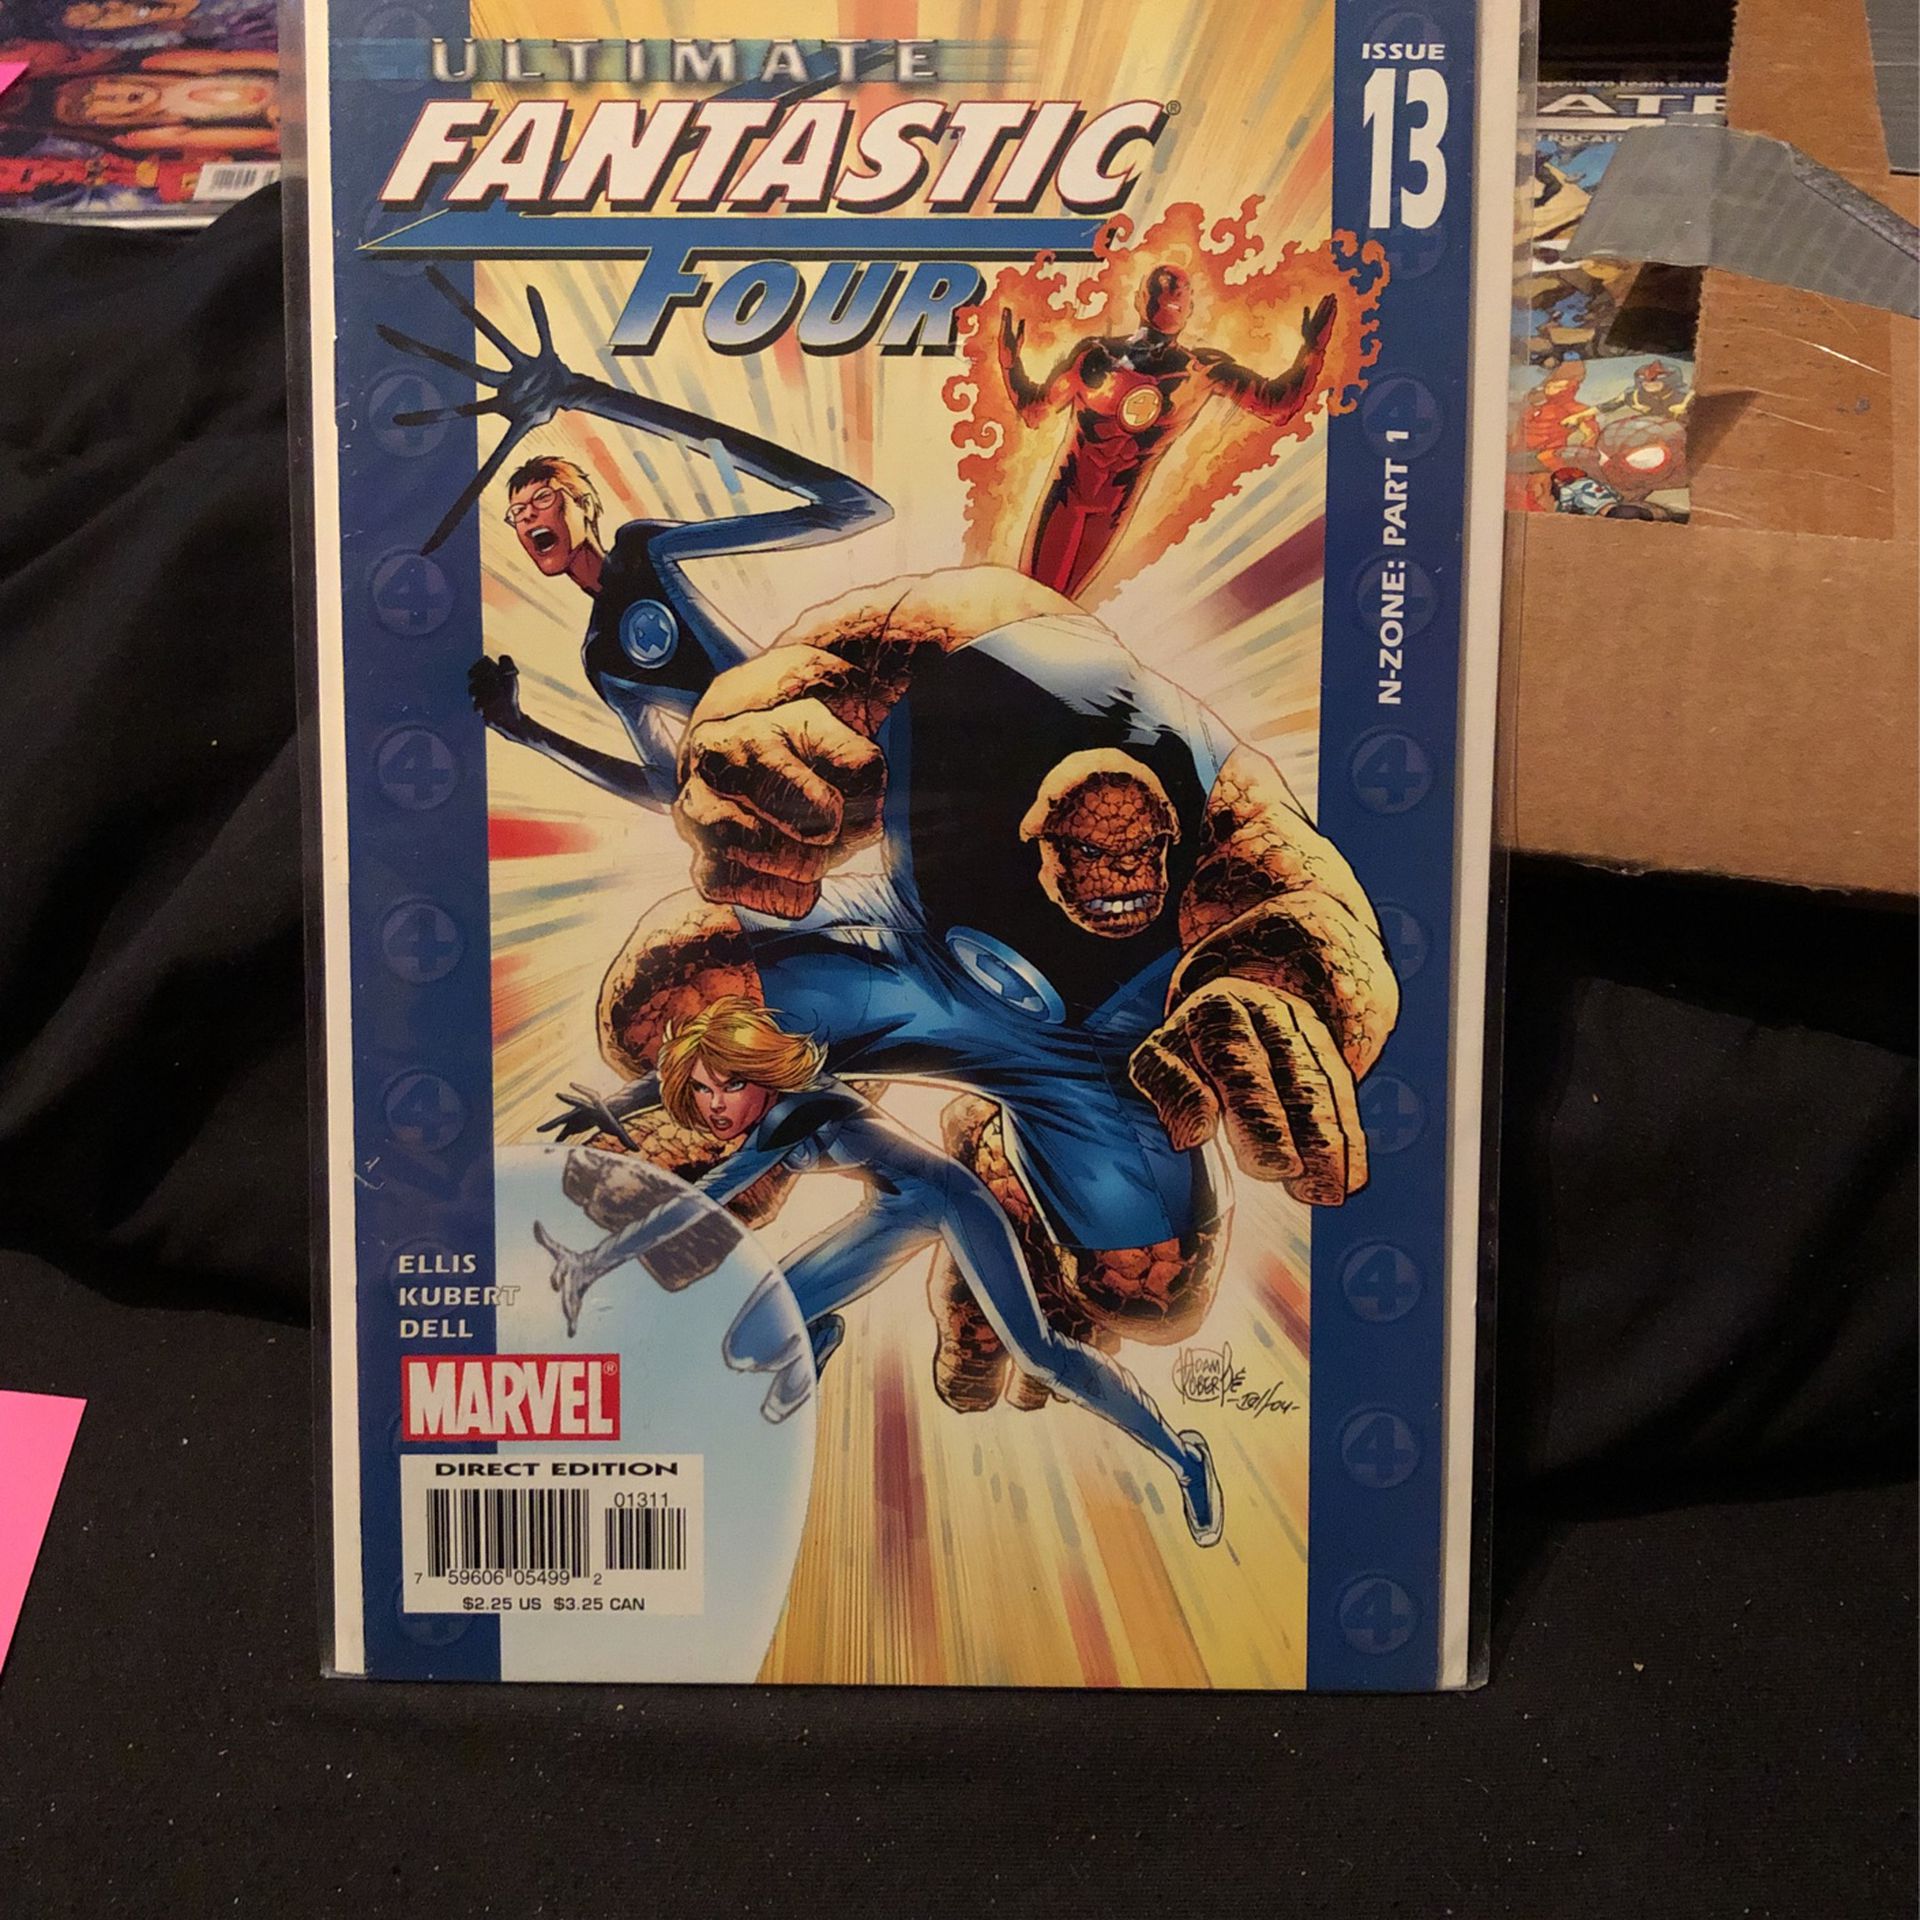 Marvel Untlimate Fantastic Four Issue 13